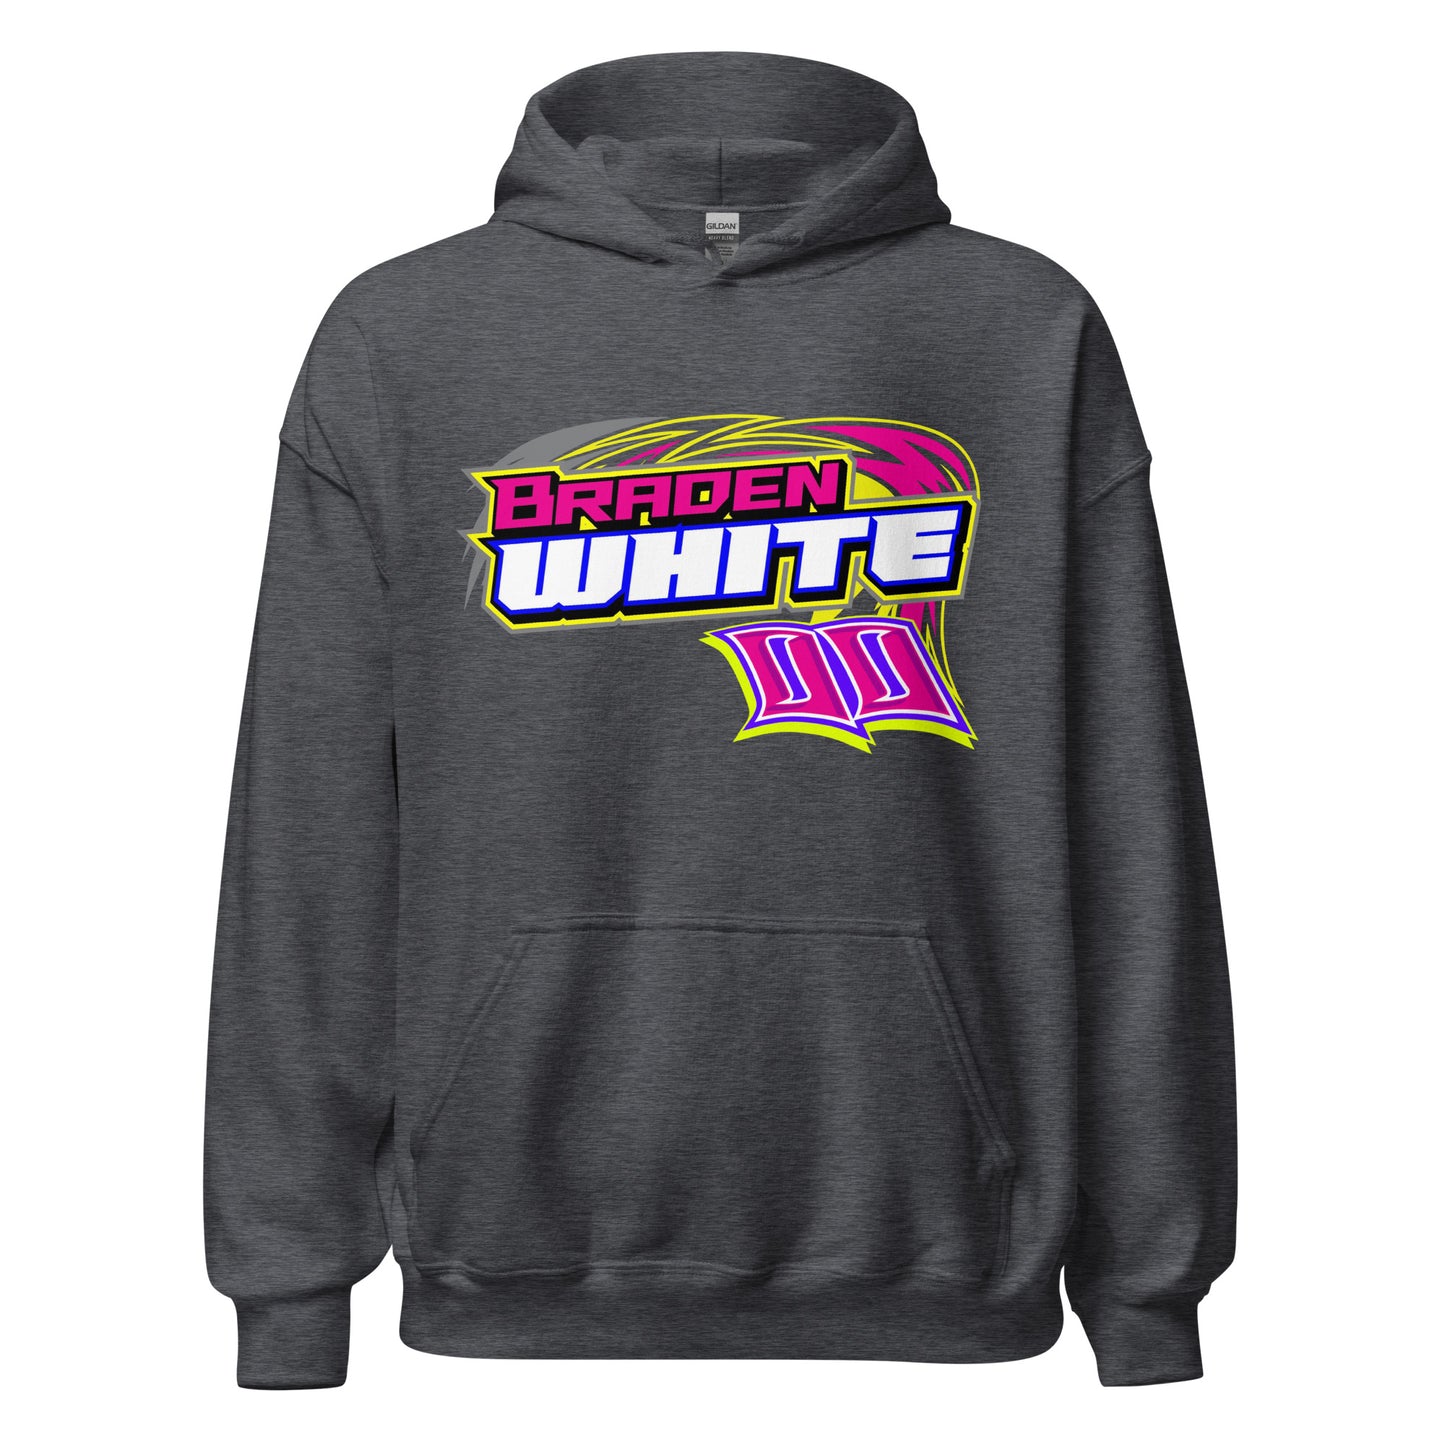 Braden White Adult Hoodie Sweatshirt